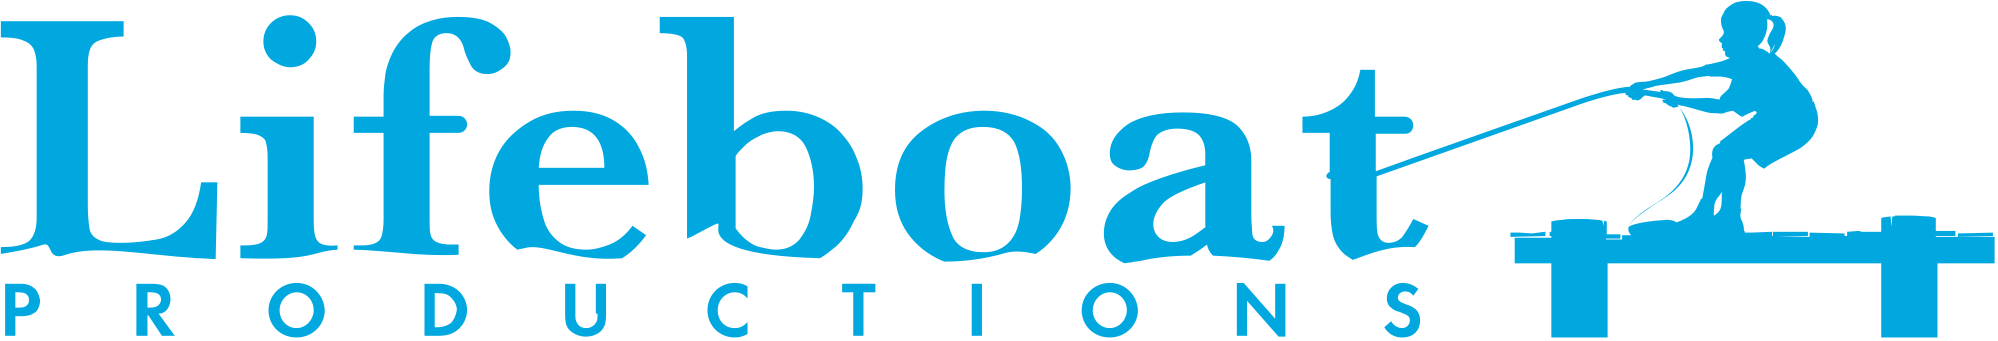 Lifeboat Productions Logo